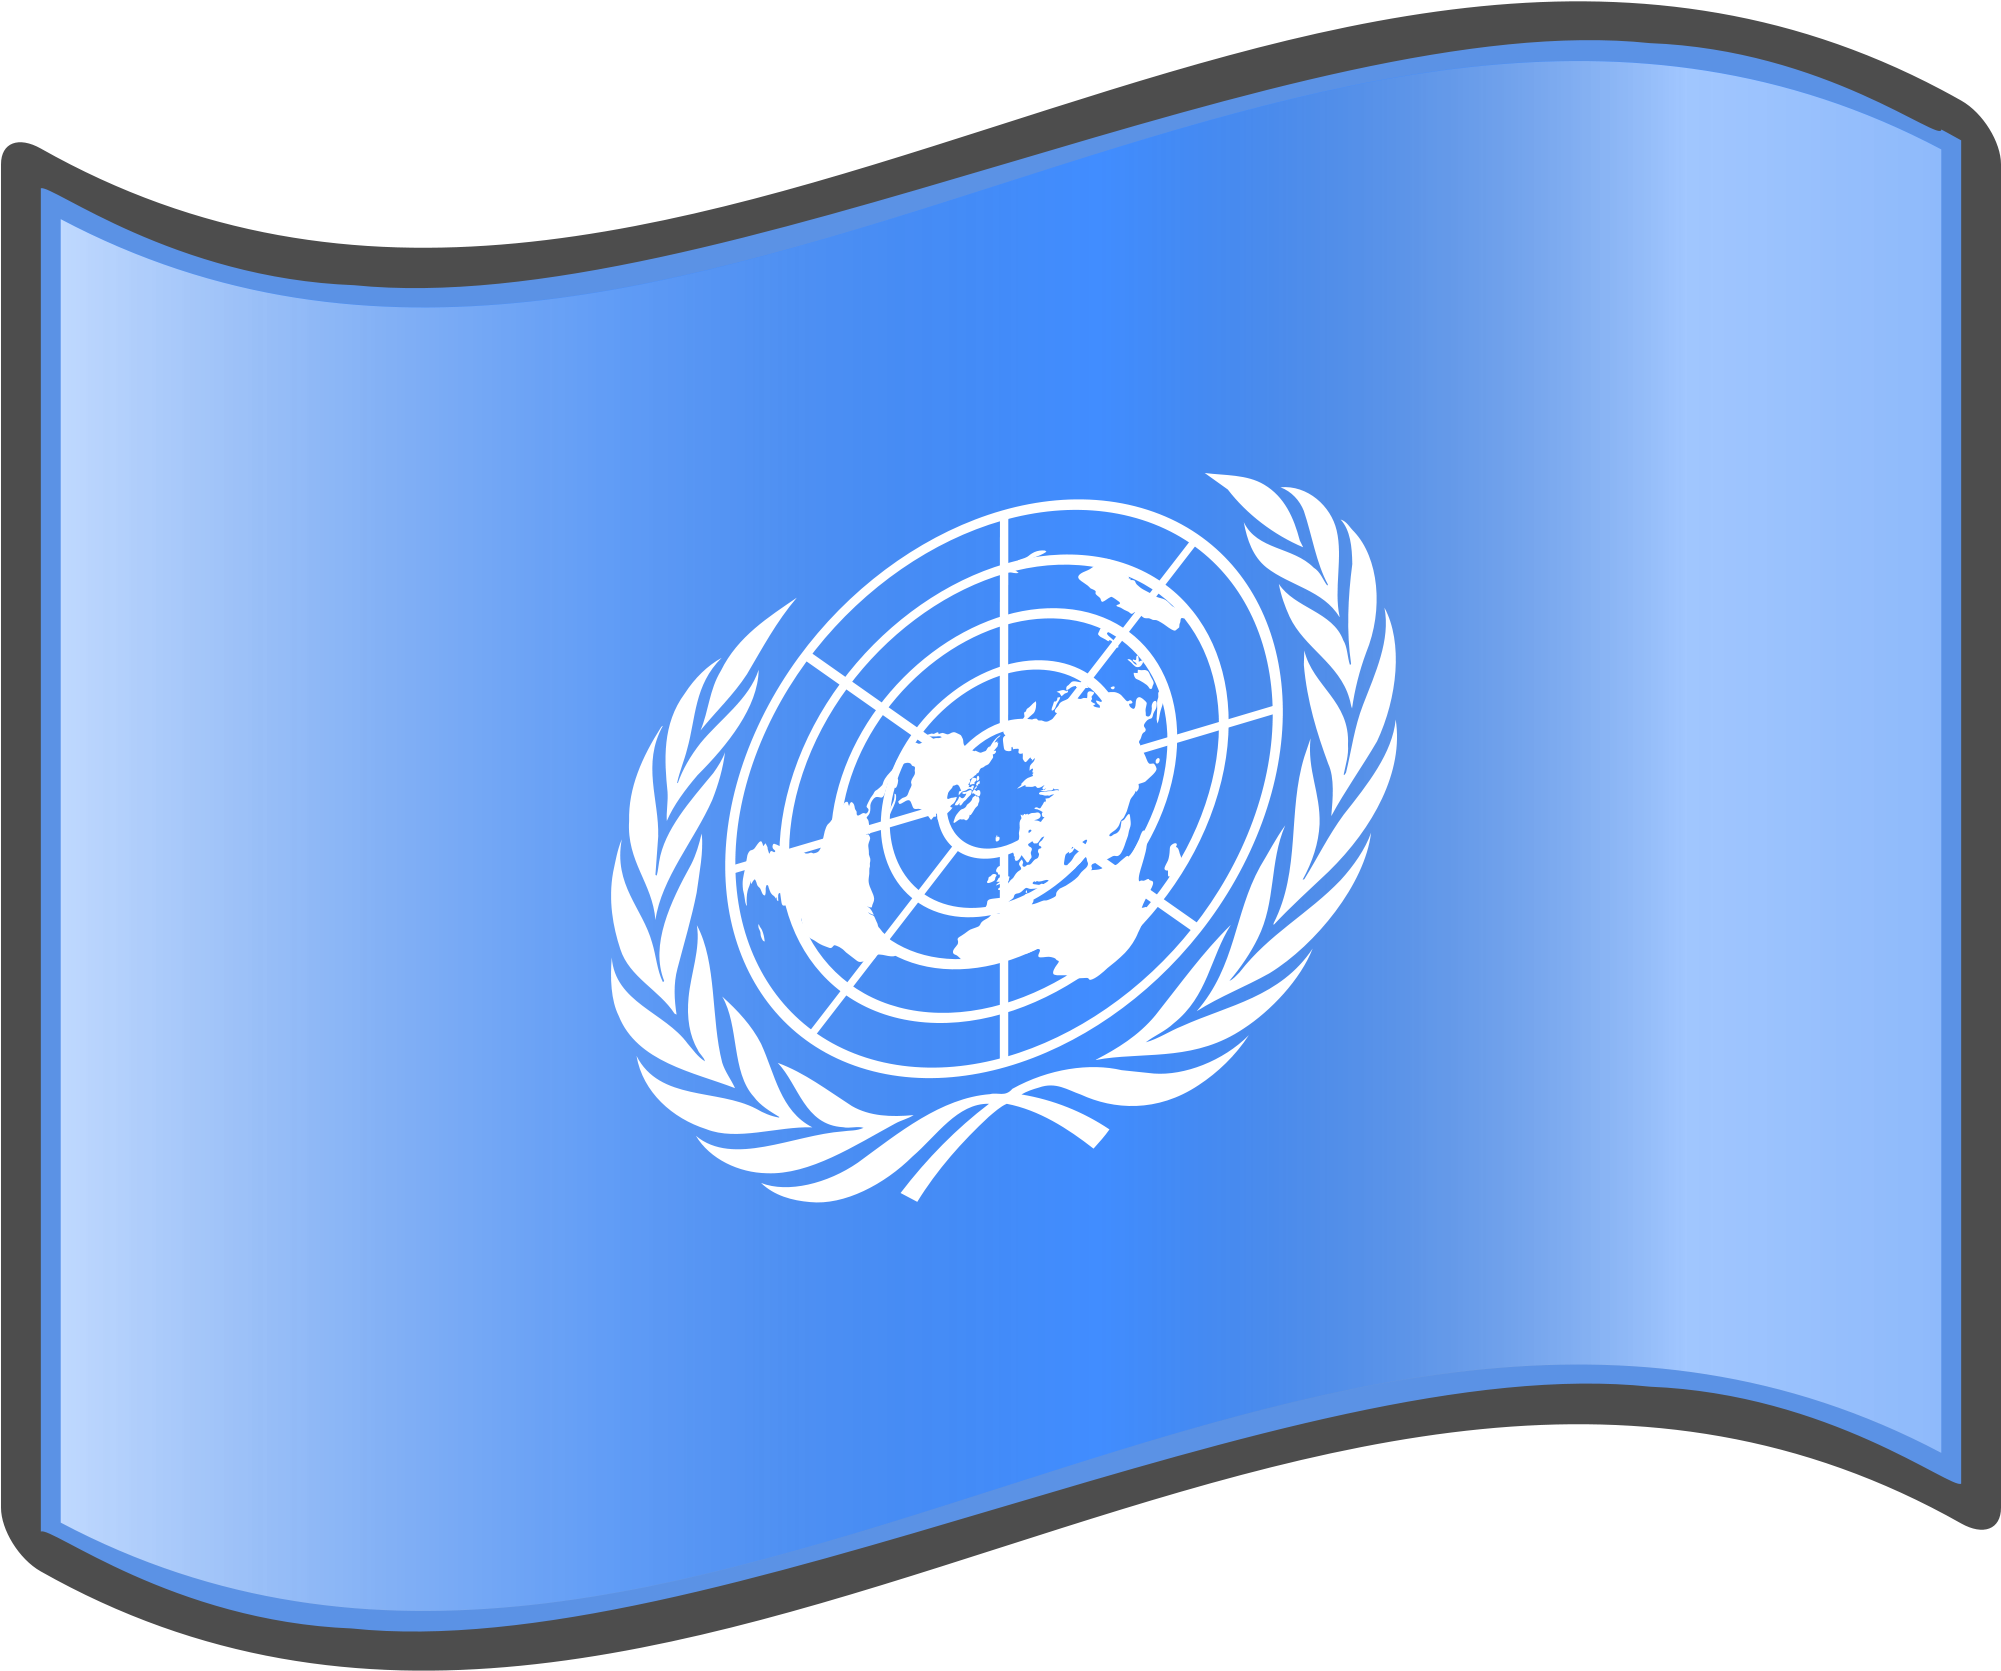 United Nations Flag Background PNG Image